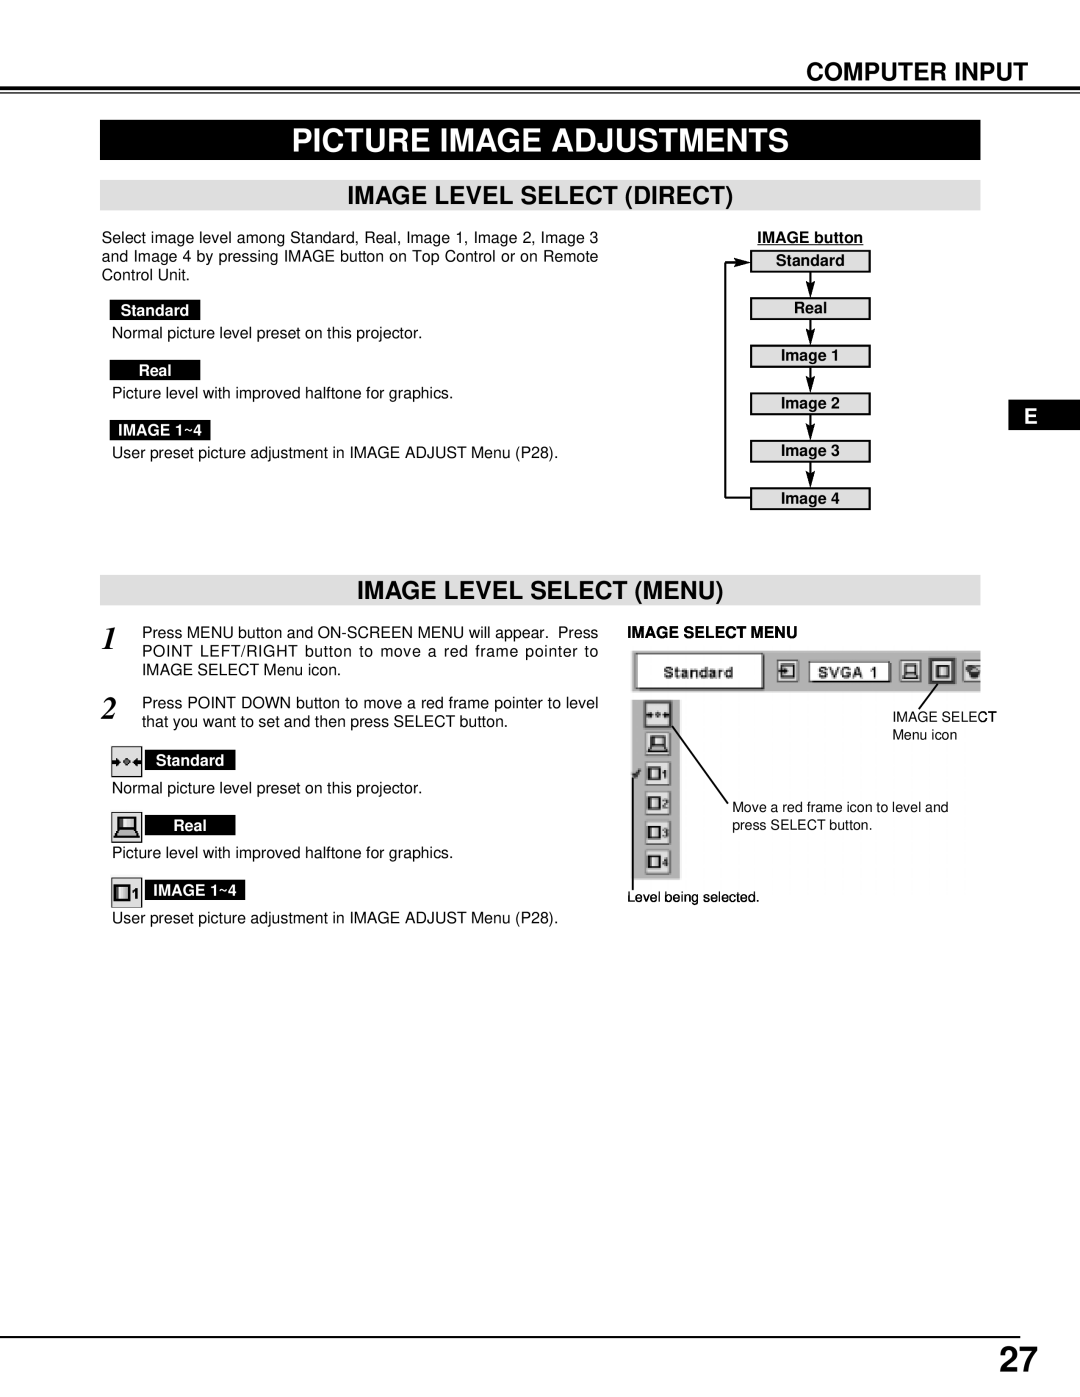 InFocus DP9295 manual Picture Image Adjustments, Image Level Select Direct, Image Level Select Menu, Computer Input 